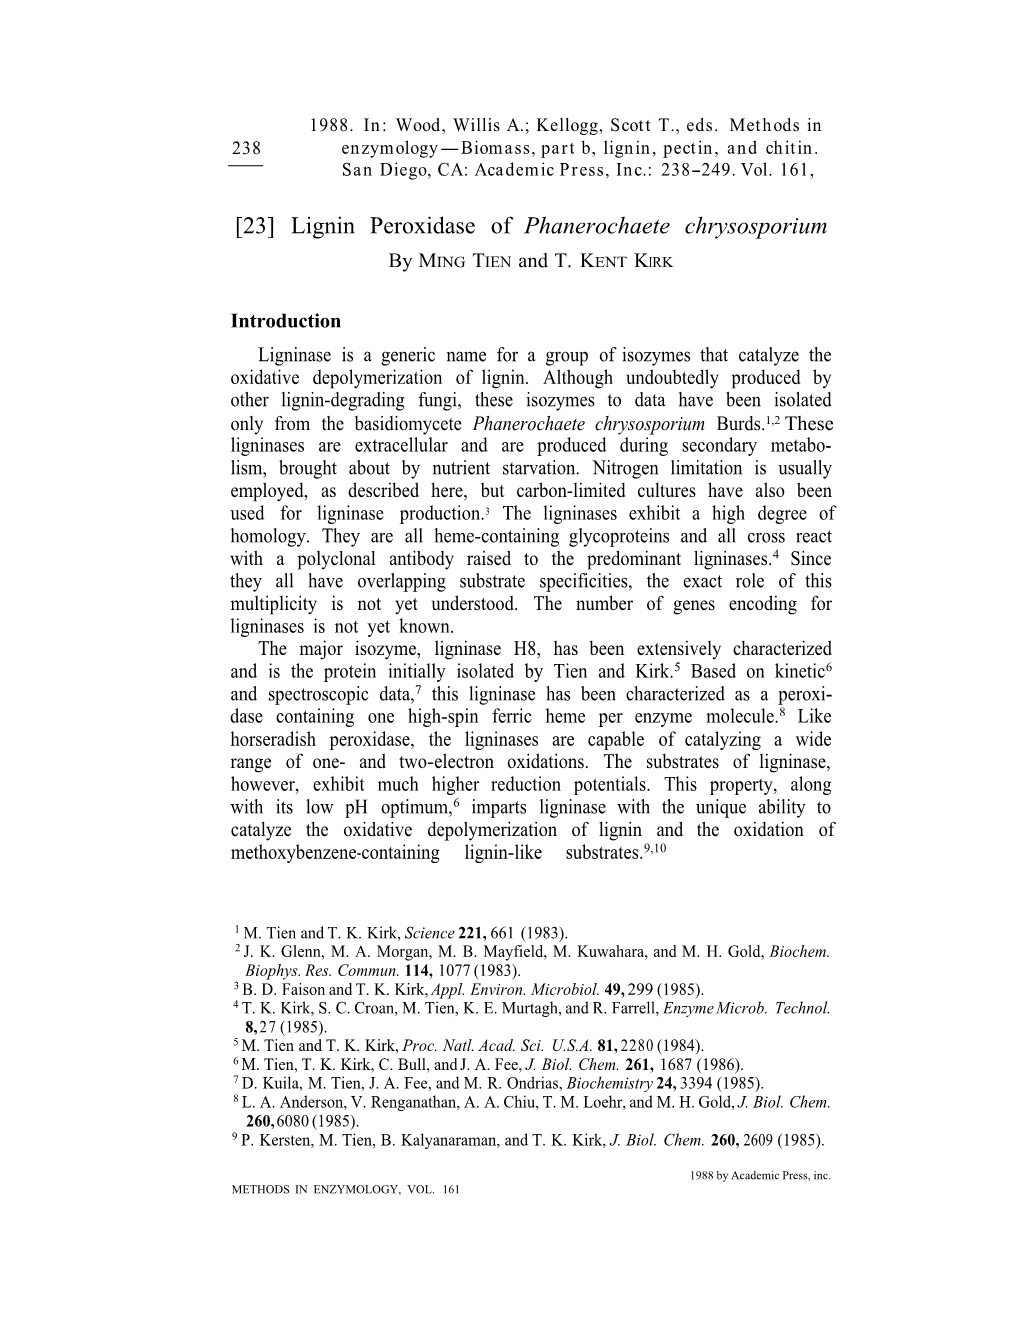 Lignin Peroxidase of Phanerochaete Chrysosporium